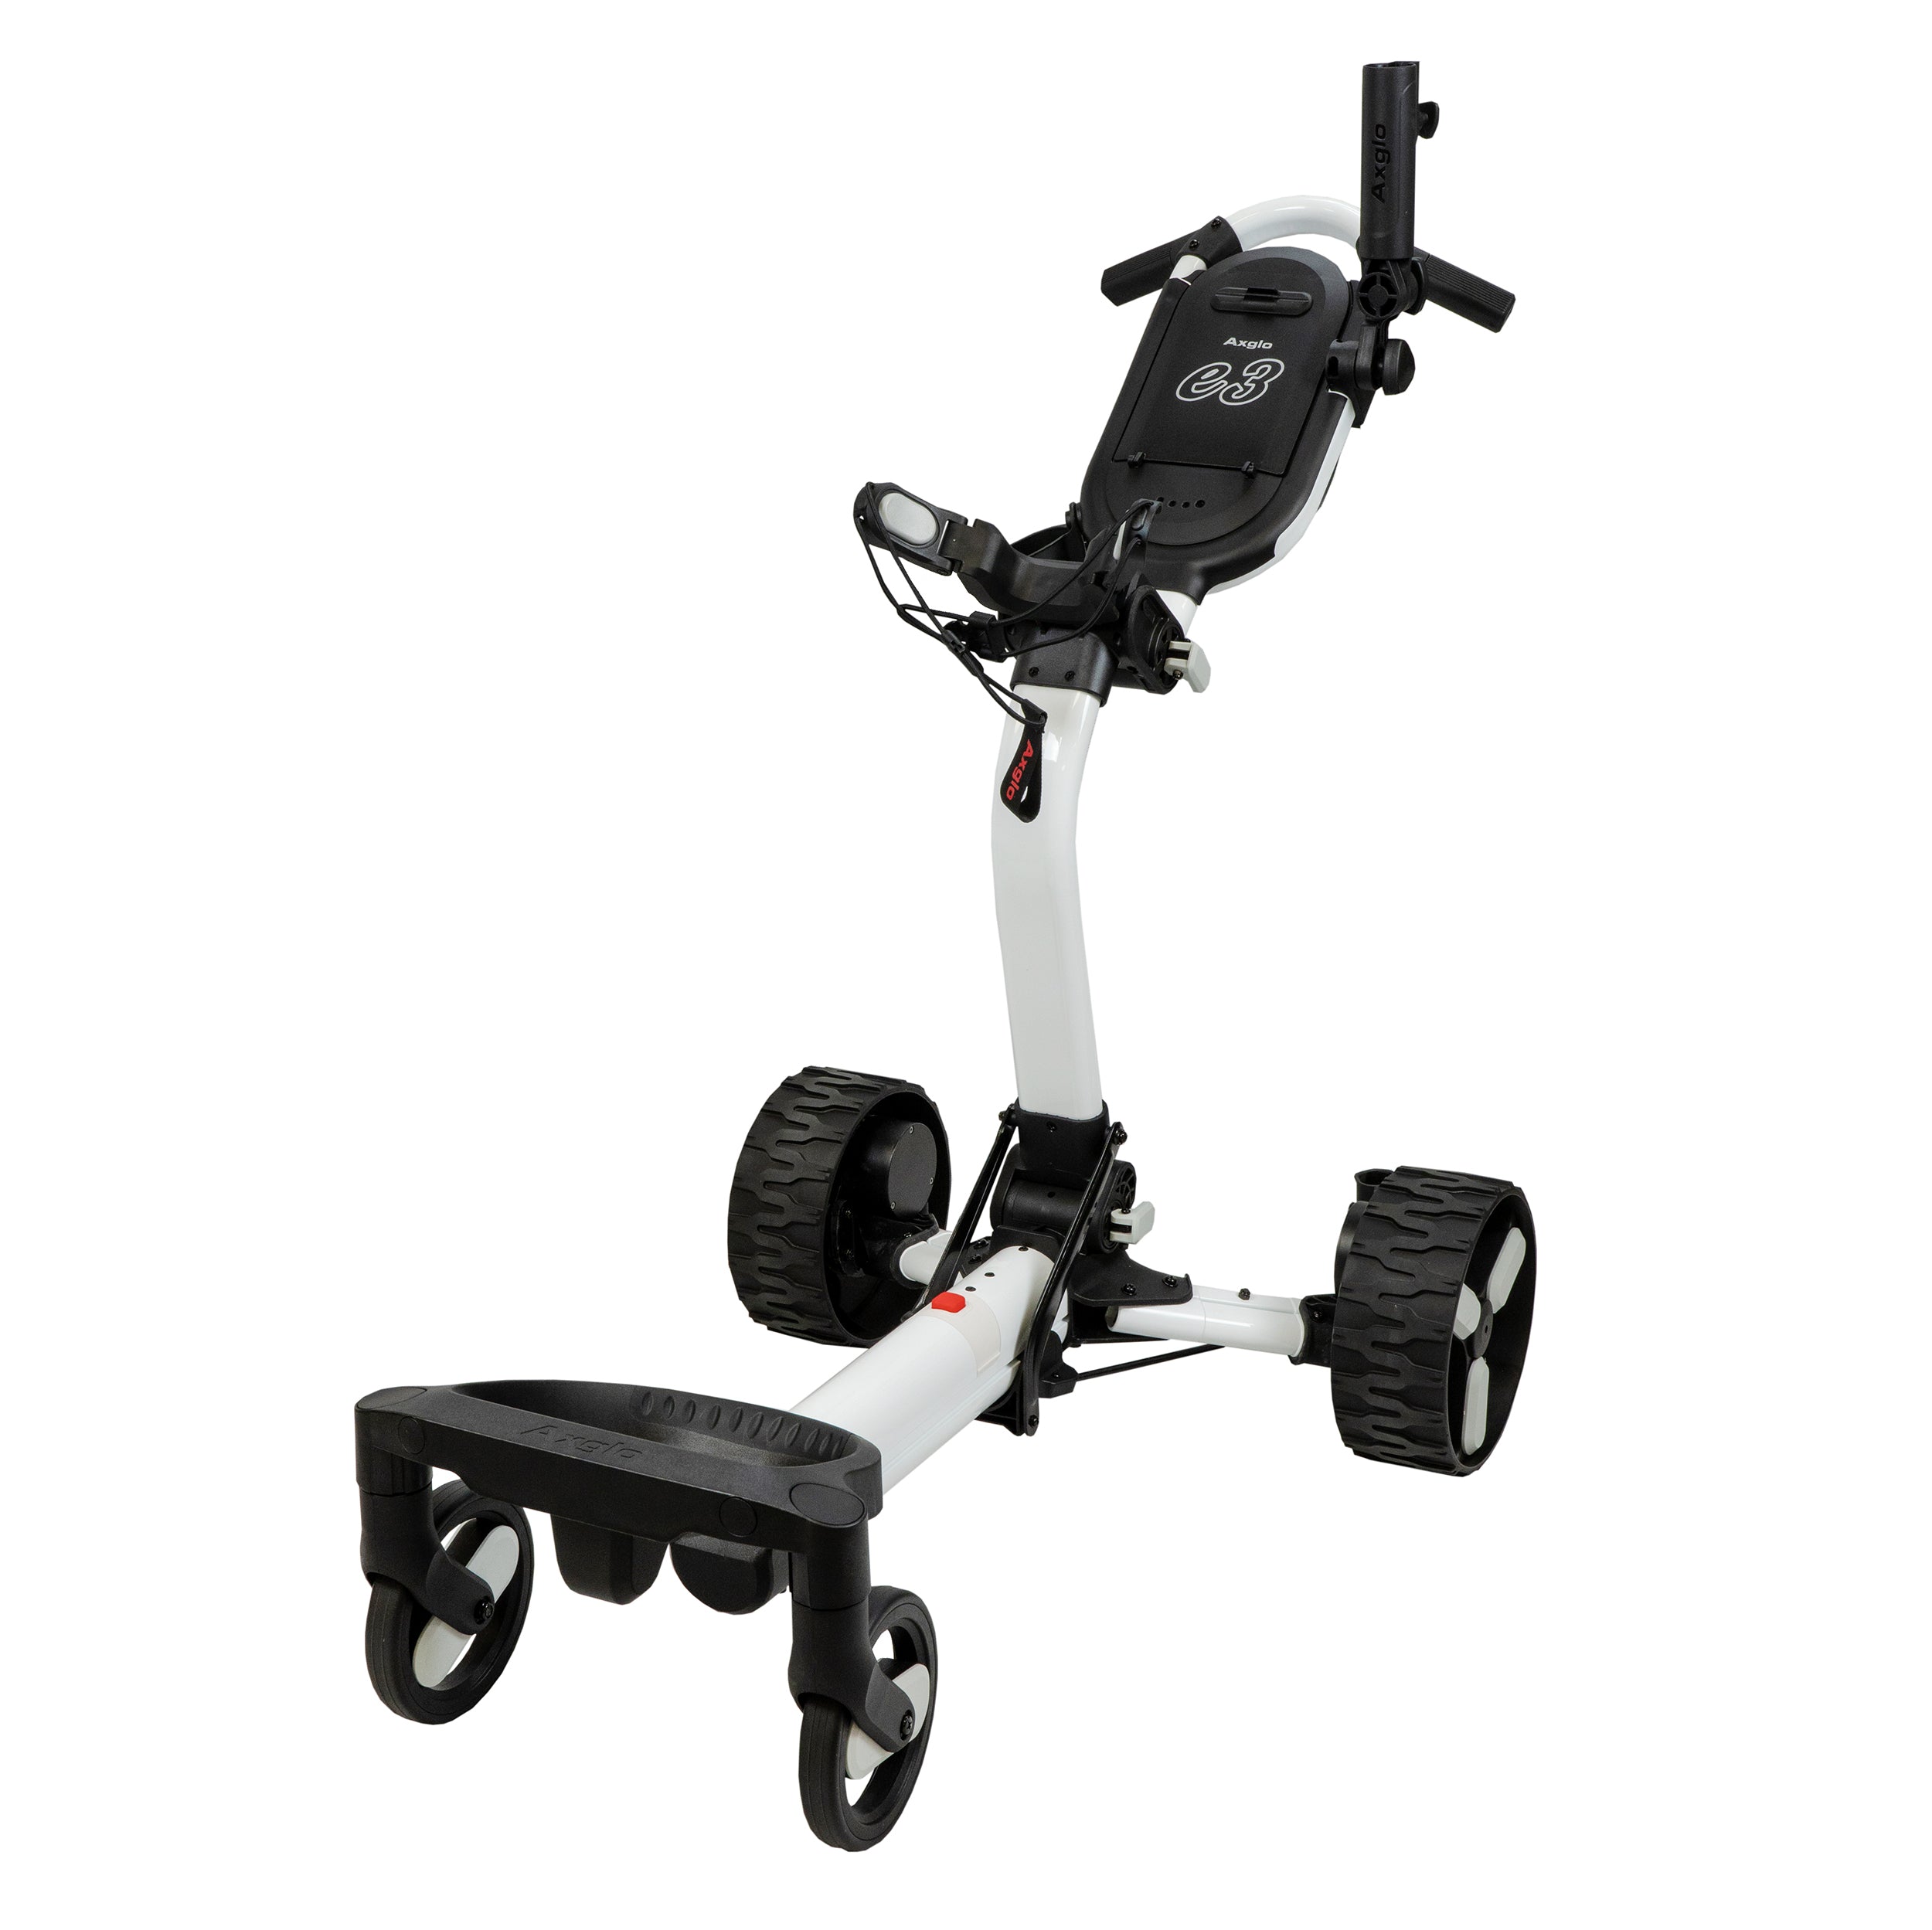 Axglo e3 - Electric Golf Push Cart